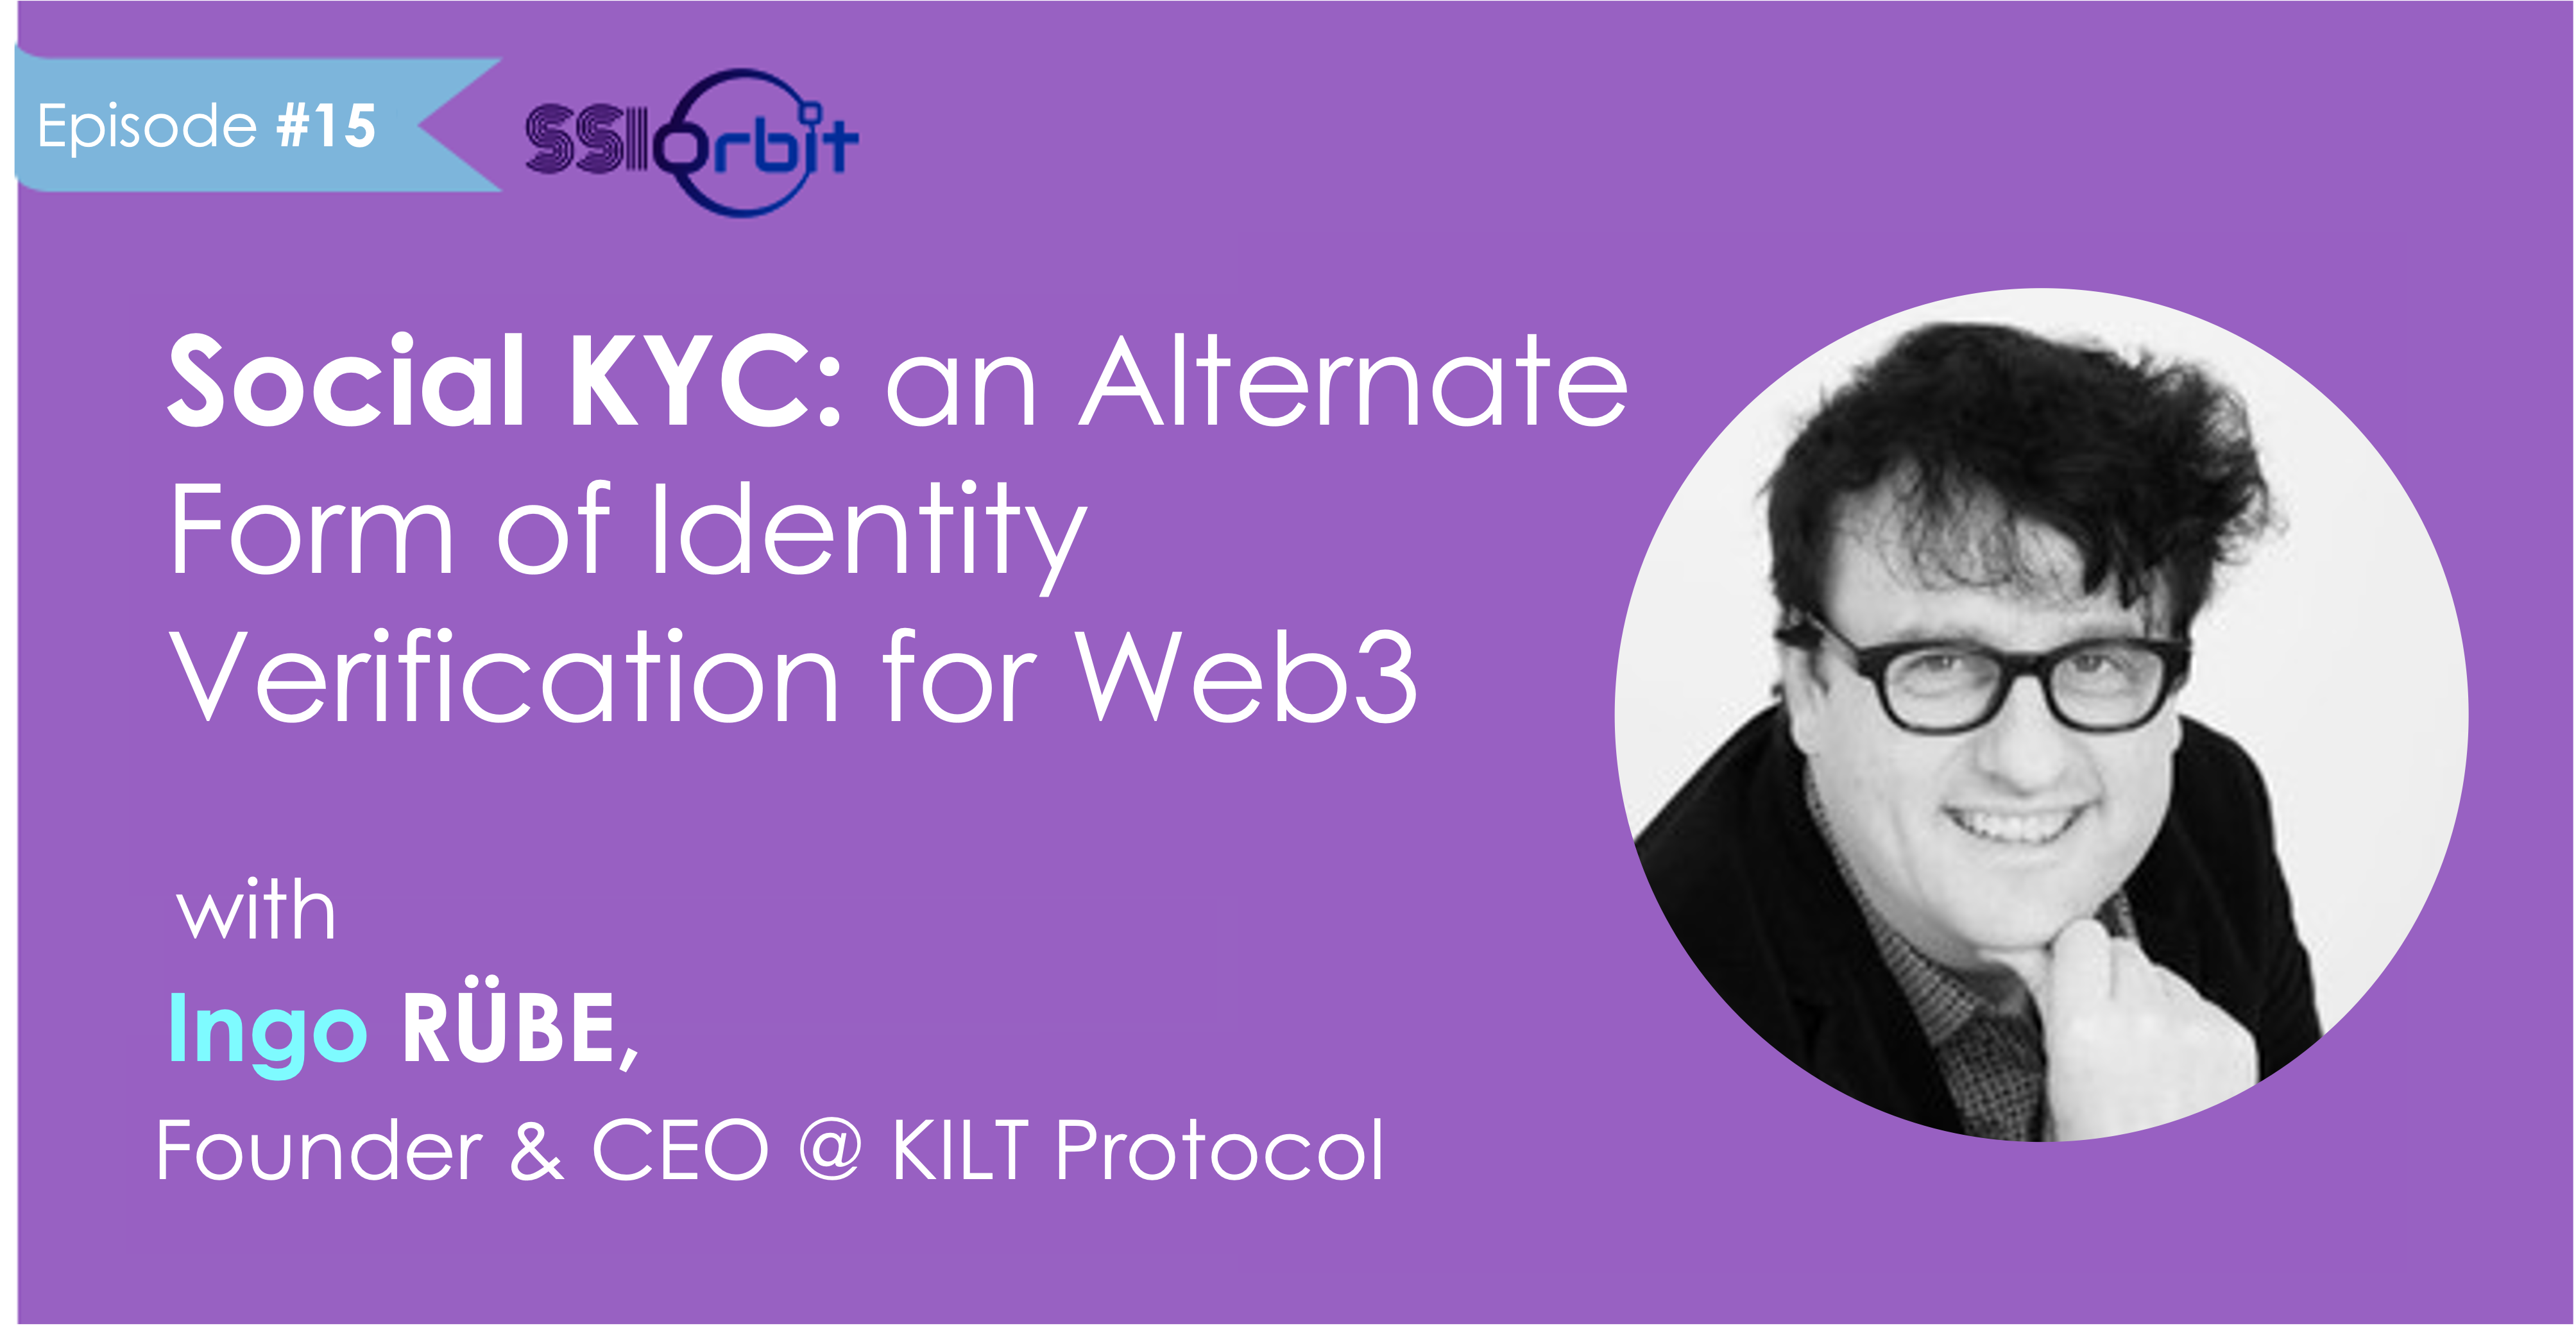 Social KYC, an Alternate Form of Identity Verification for Web3 with Ingo Rübe